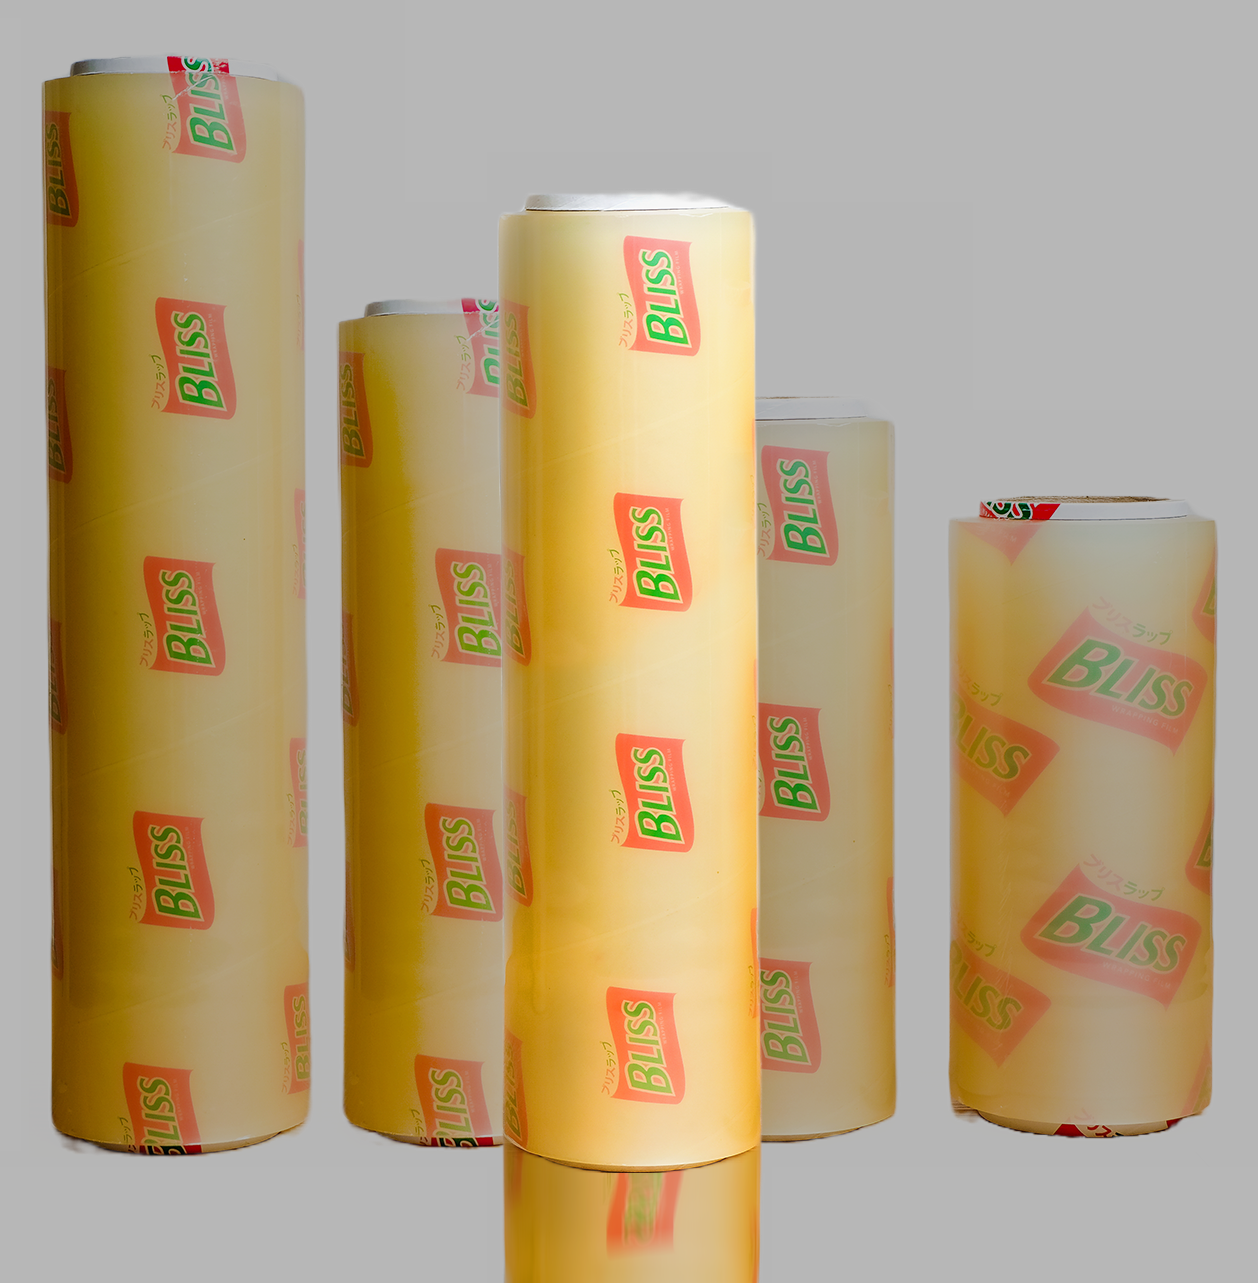 Bliss PVC Cling Wrap Plastik ukuran lebar 40cm. plastik pvc cling wrap terbaik lebih murah dan berkualitas dari best fresh, total, raypin bermerk bliss